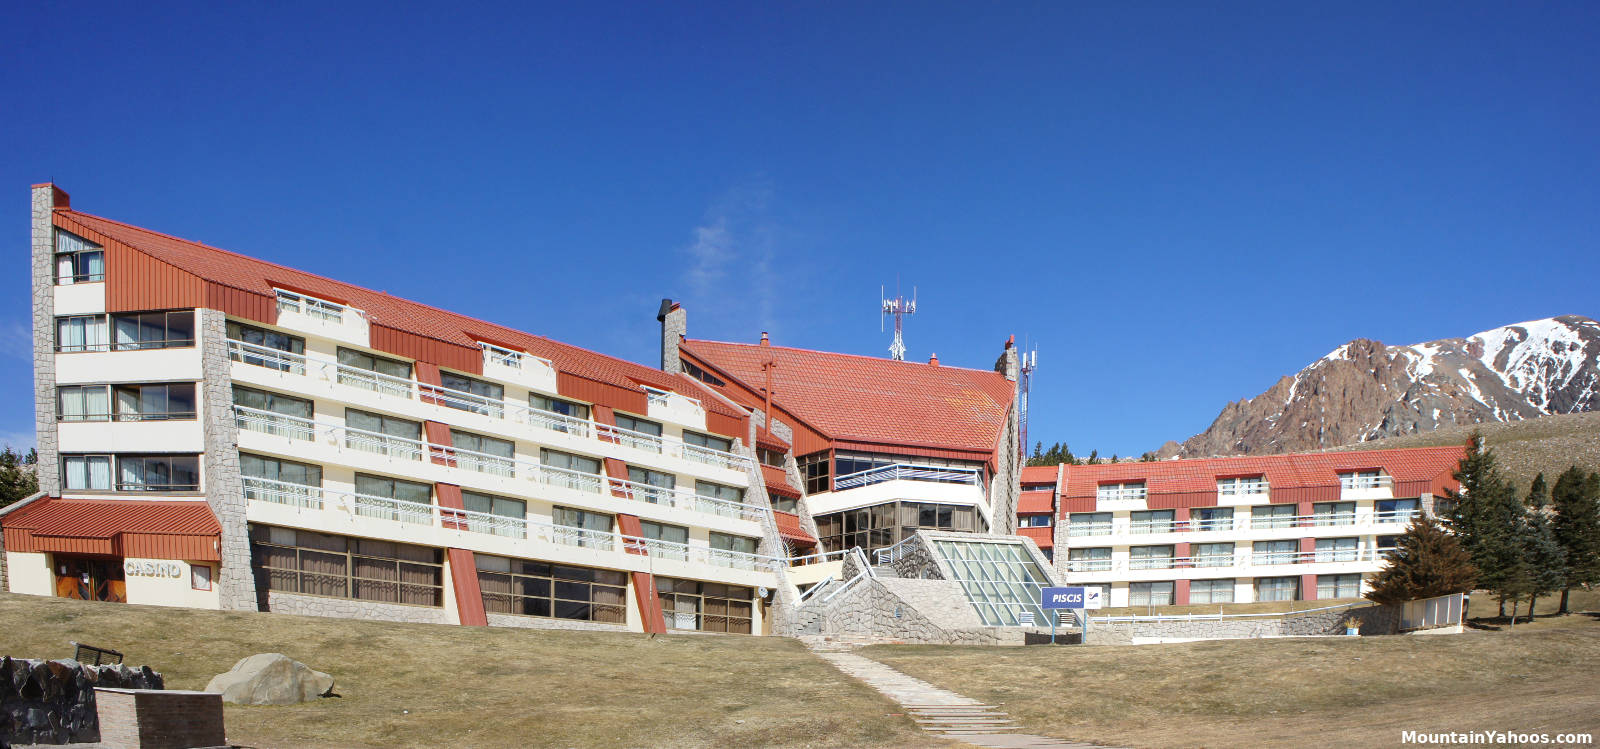 Las Lenas ski reosrt base accommodations - Hotel Piscus